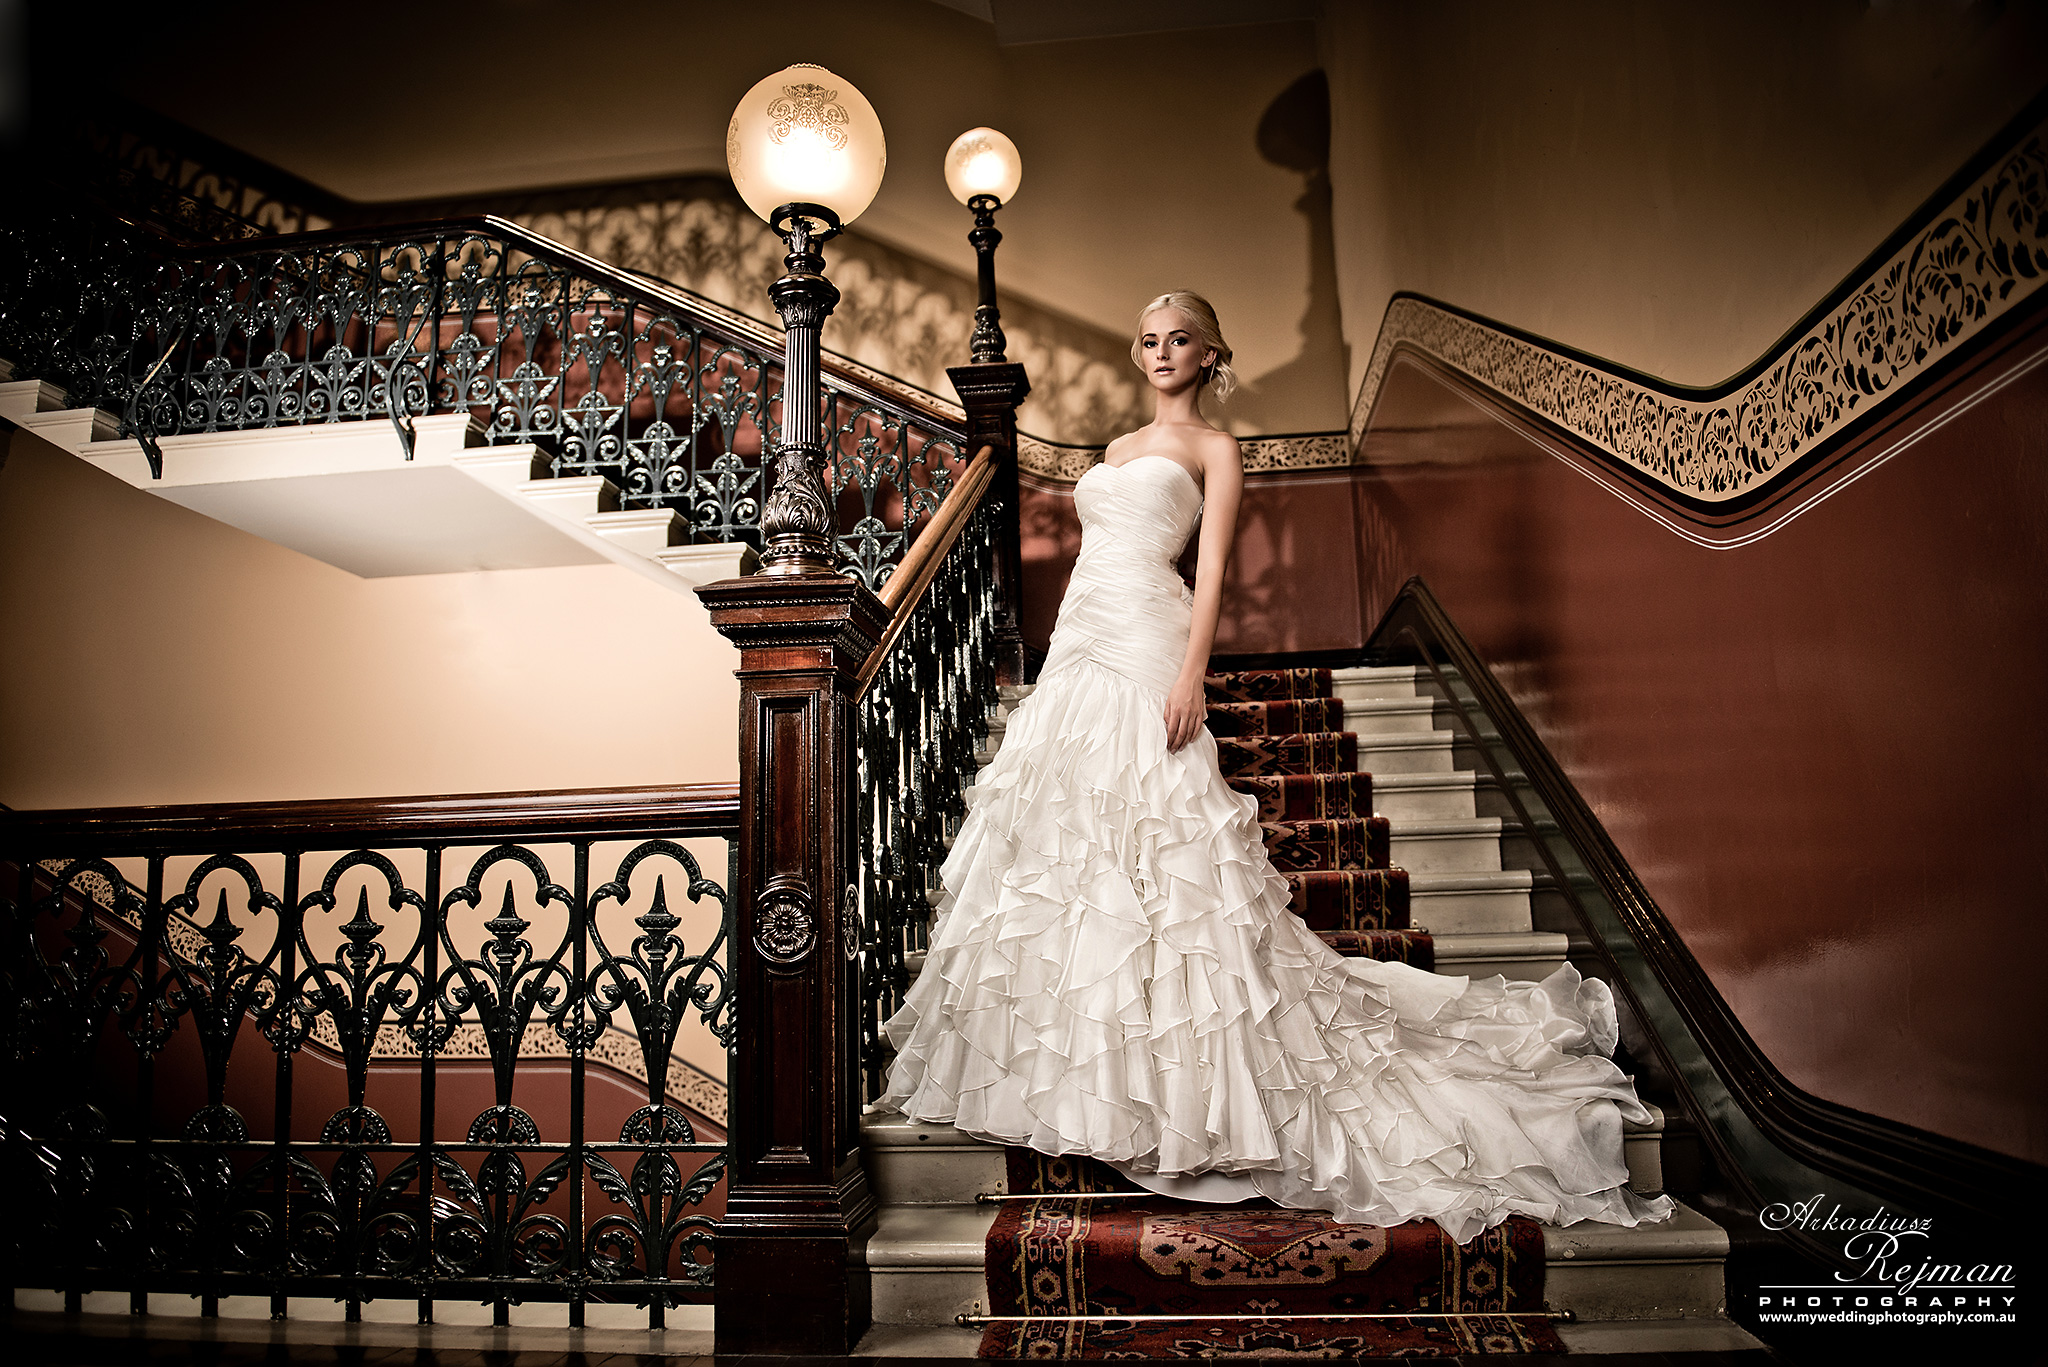 Bridal Fashion Photo session for iModa | Corporate & Event Photography ...